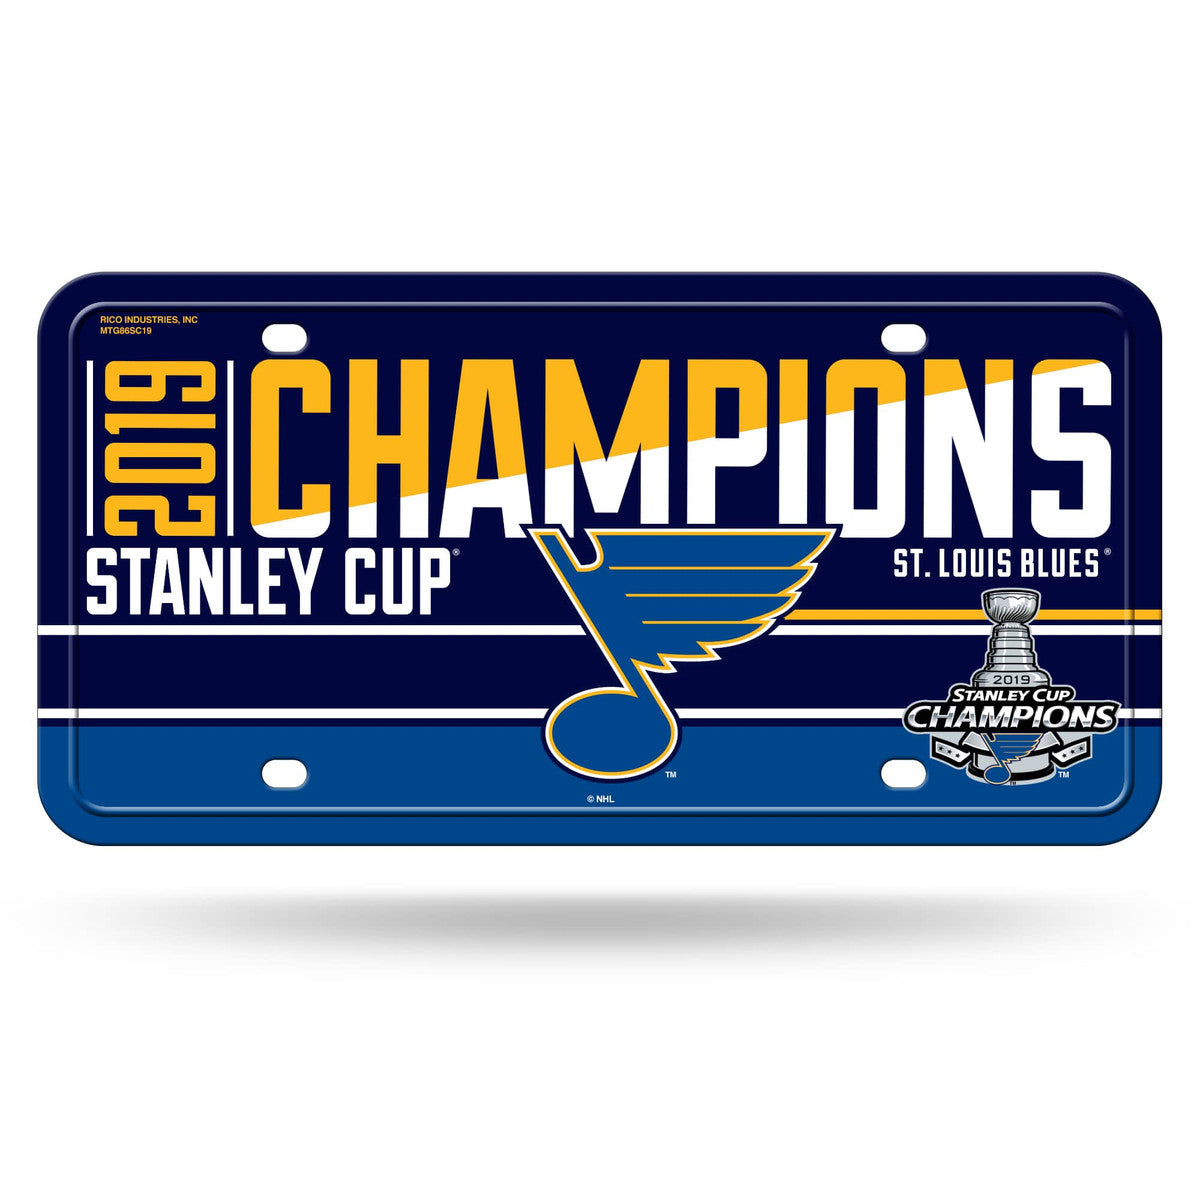 St. Louis Blues 2019 Stanley Cup Champions 16oz. Sublimated Pint